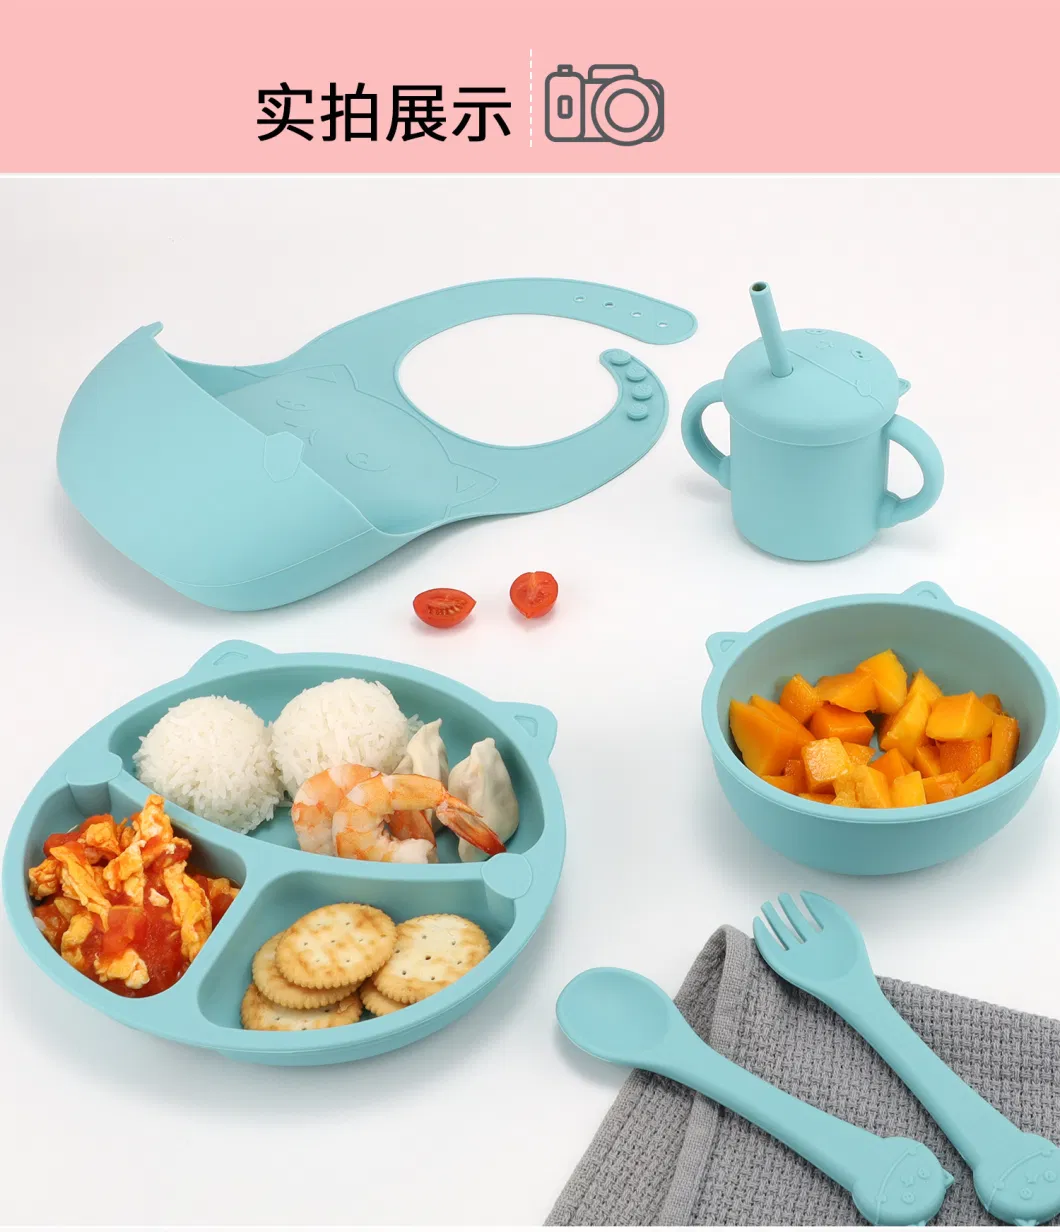 Food Grade Silicone Feeding Bowl Kitchen Tool Baby Dinner Set